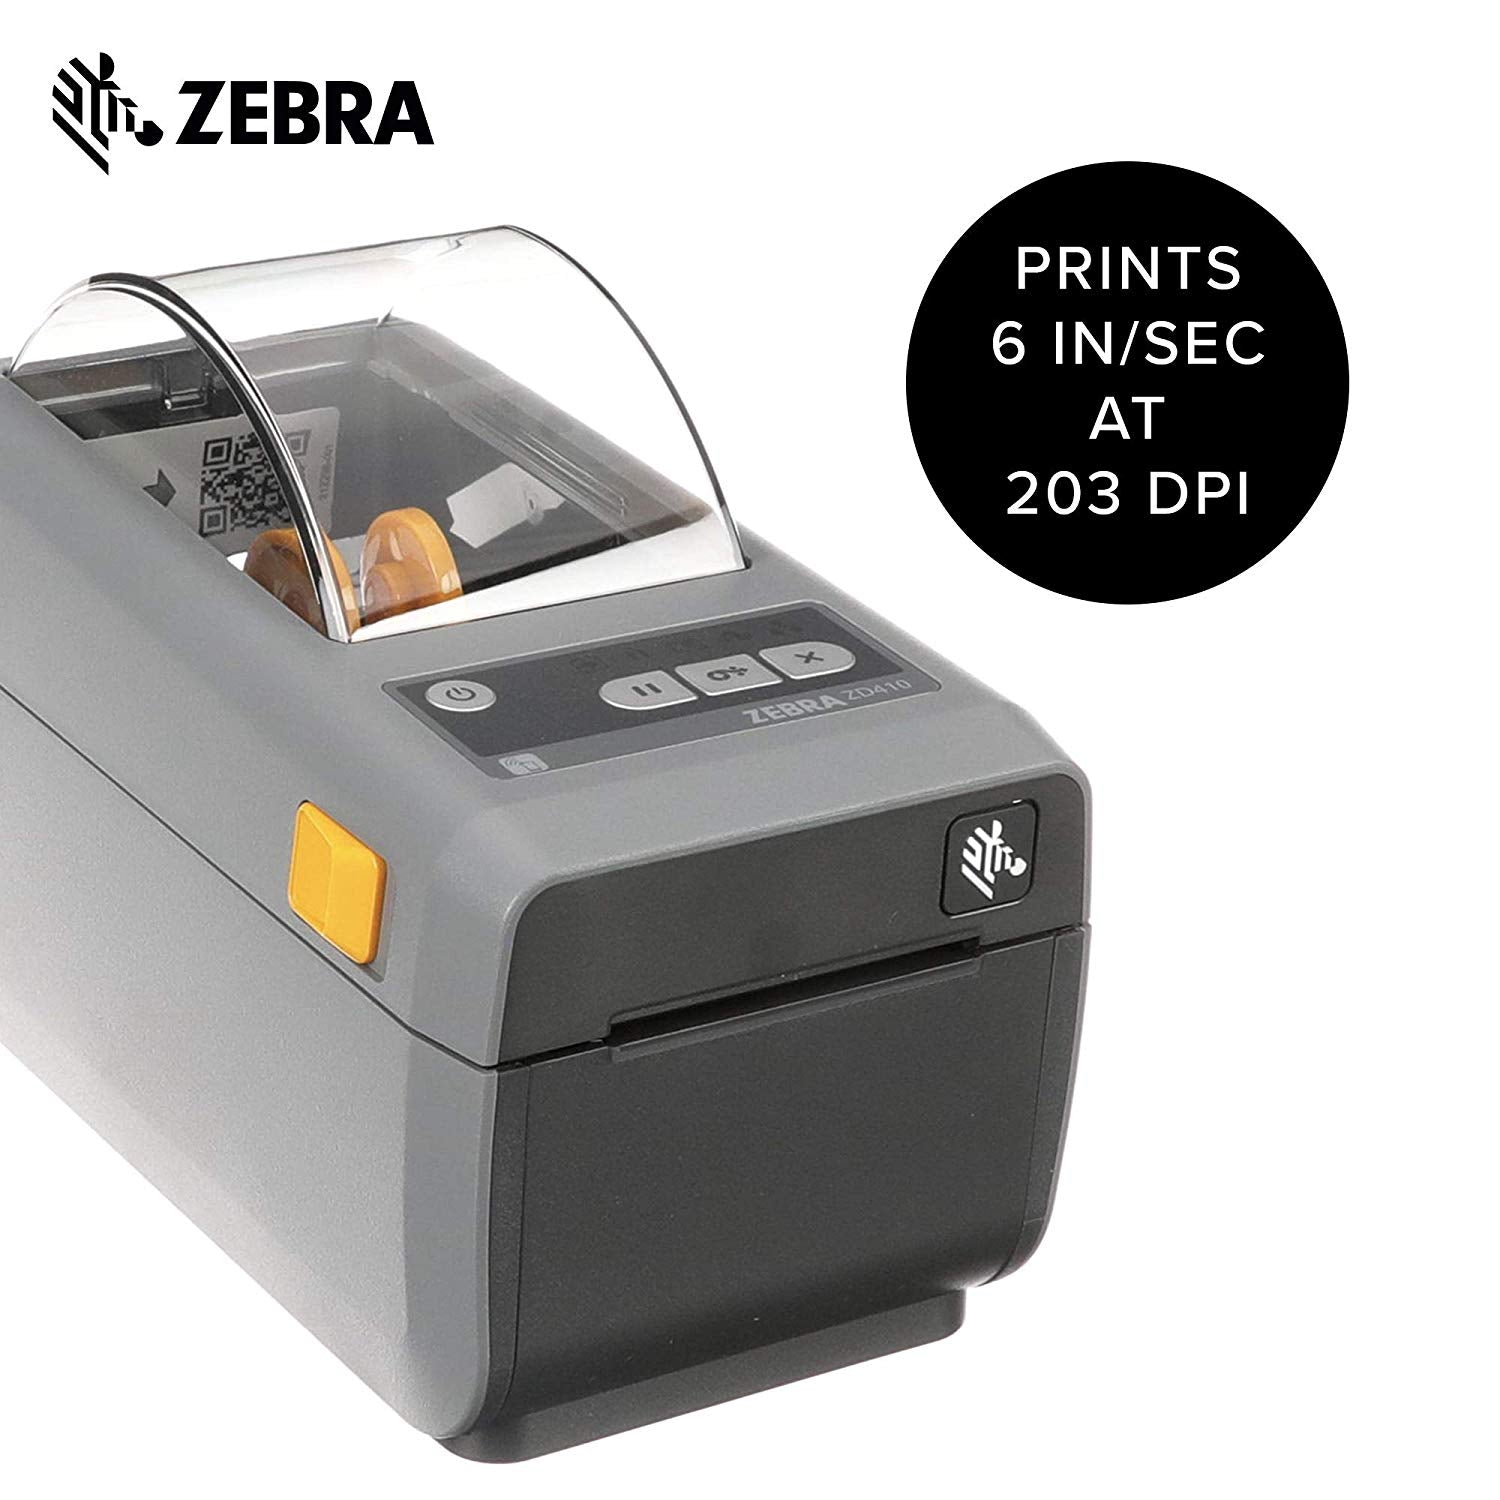 Zebra Zd410 Wireless Thermal Printer Digital Store Nairobi Kenya 1351